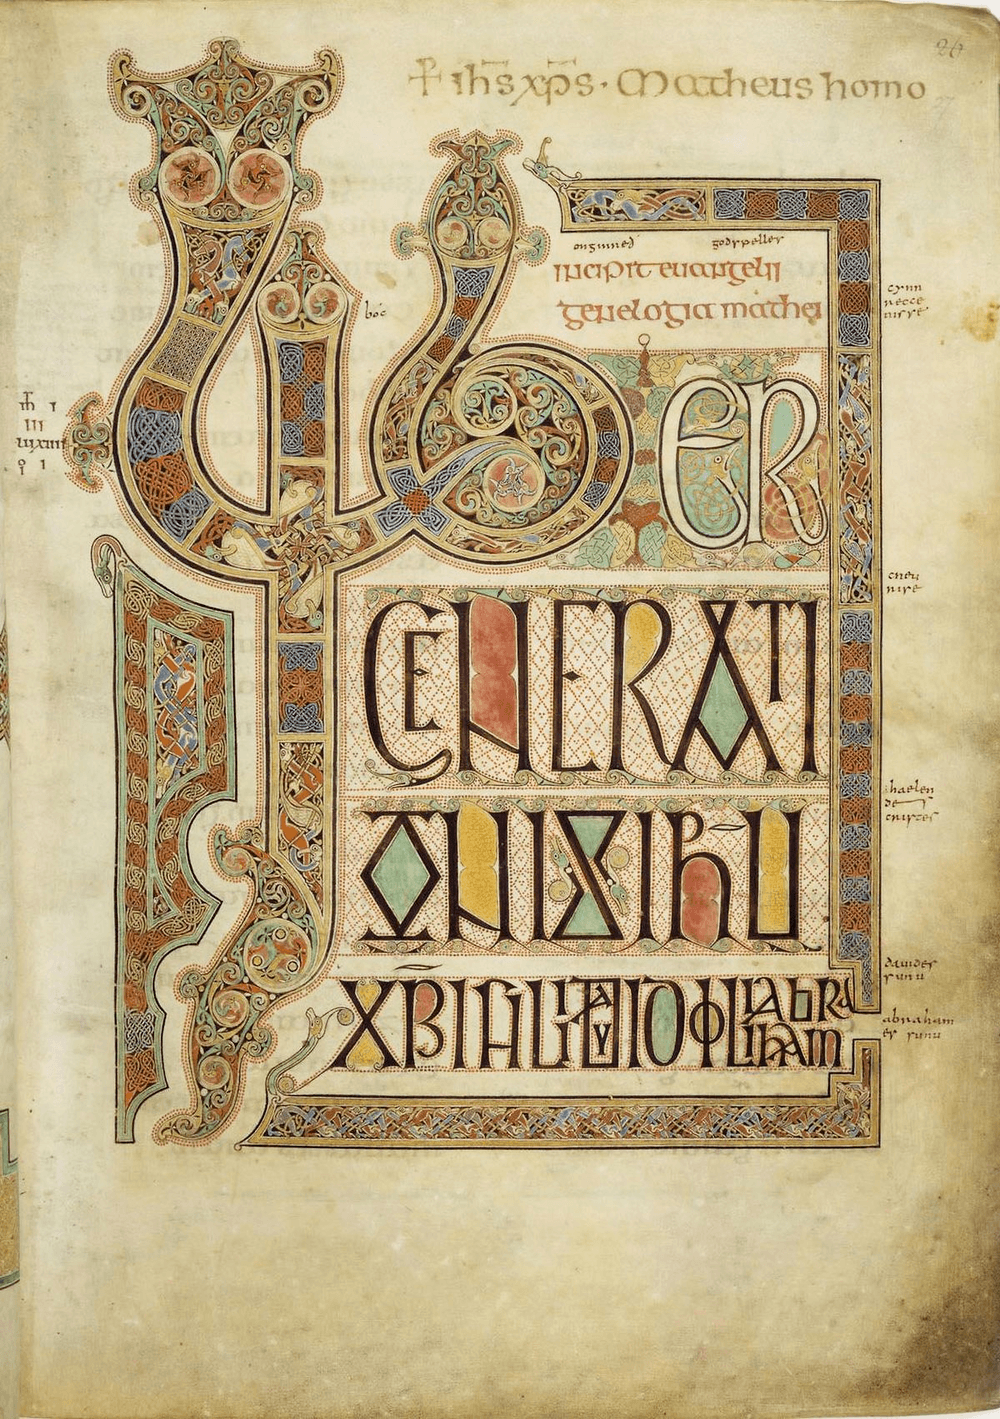 The Lindisfarne Gospel